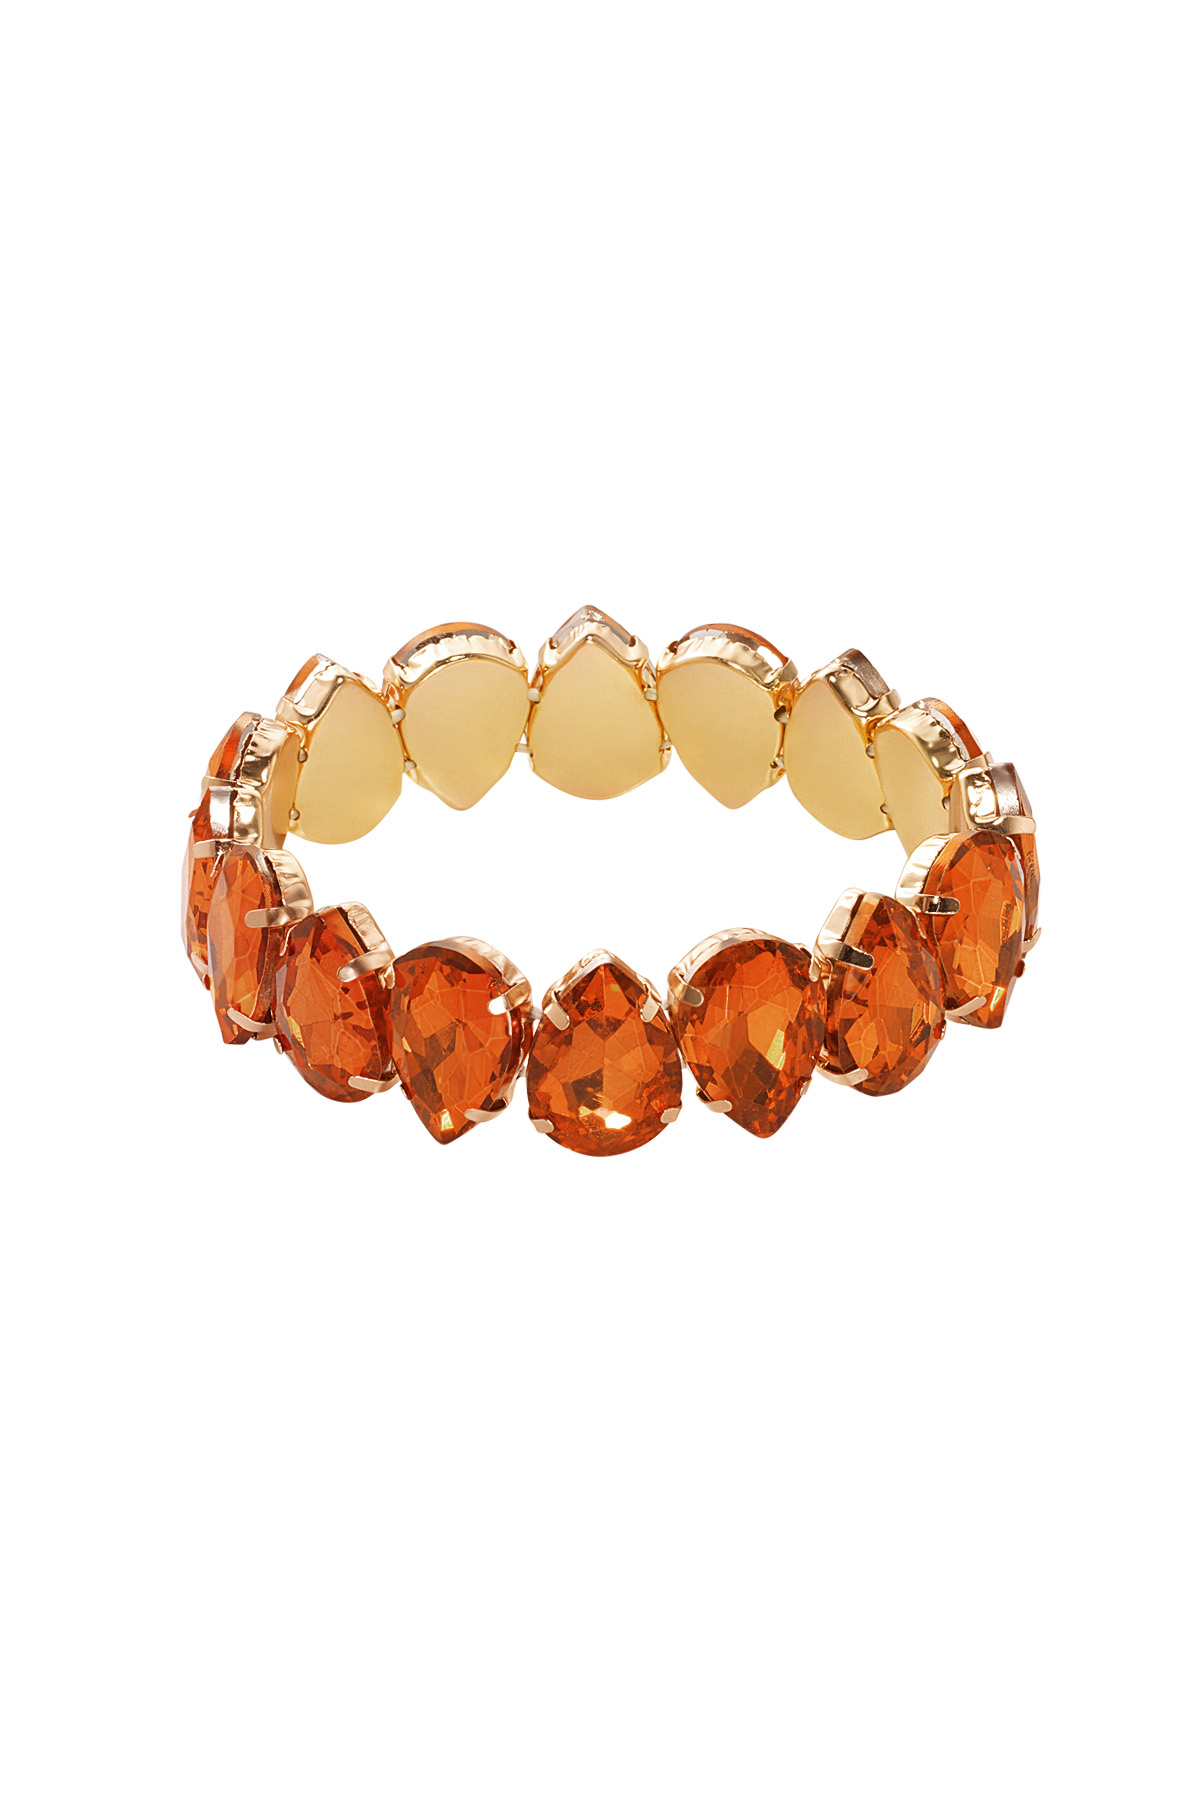 Bracelet glass beads - orange h5 